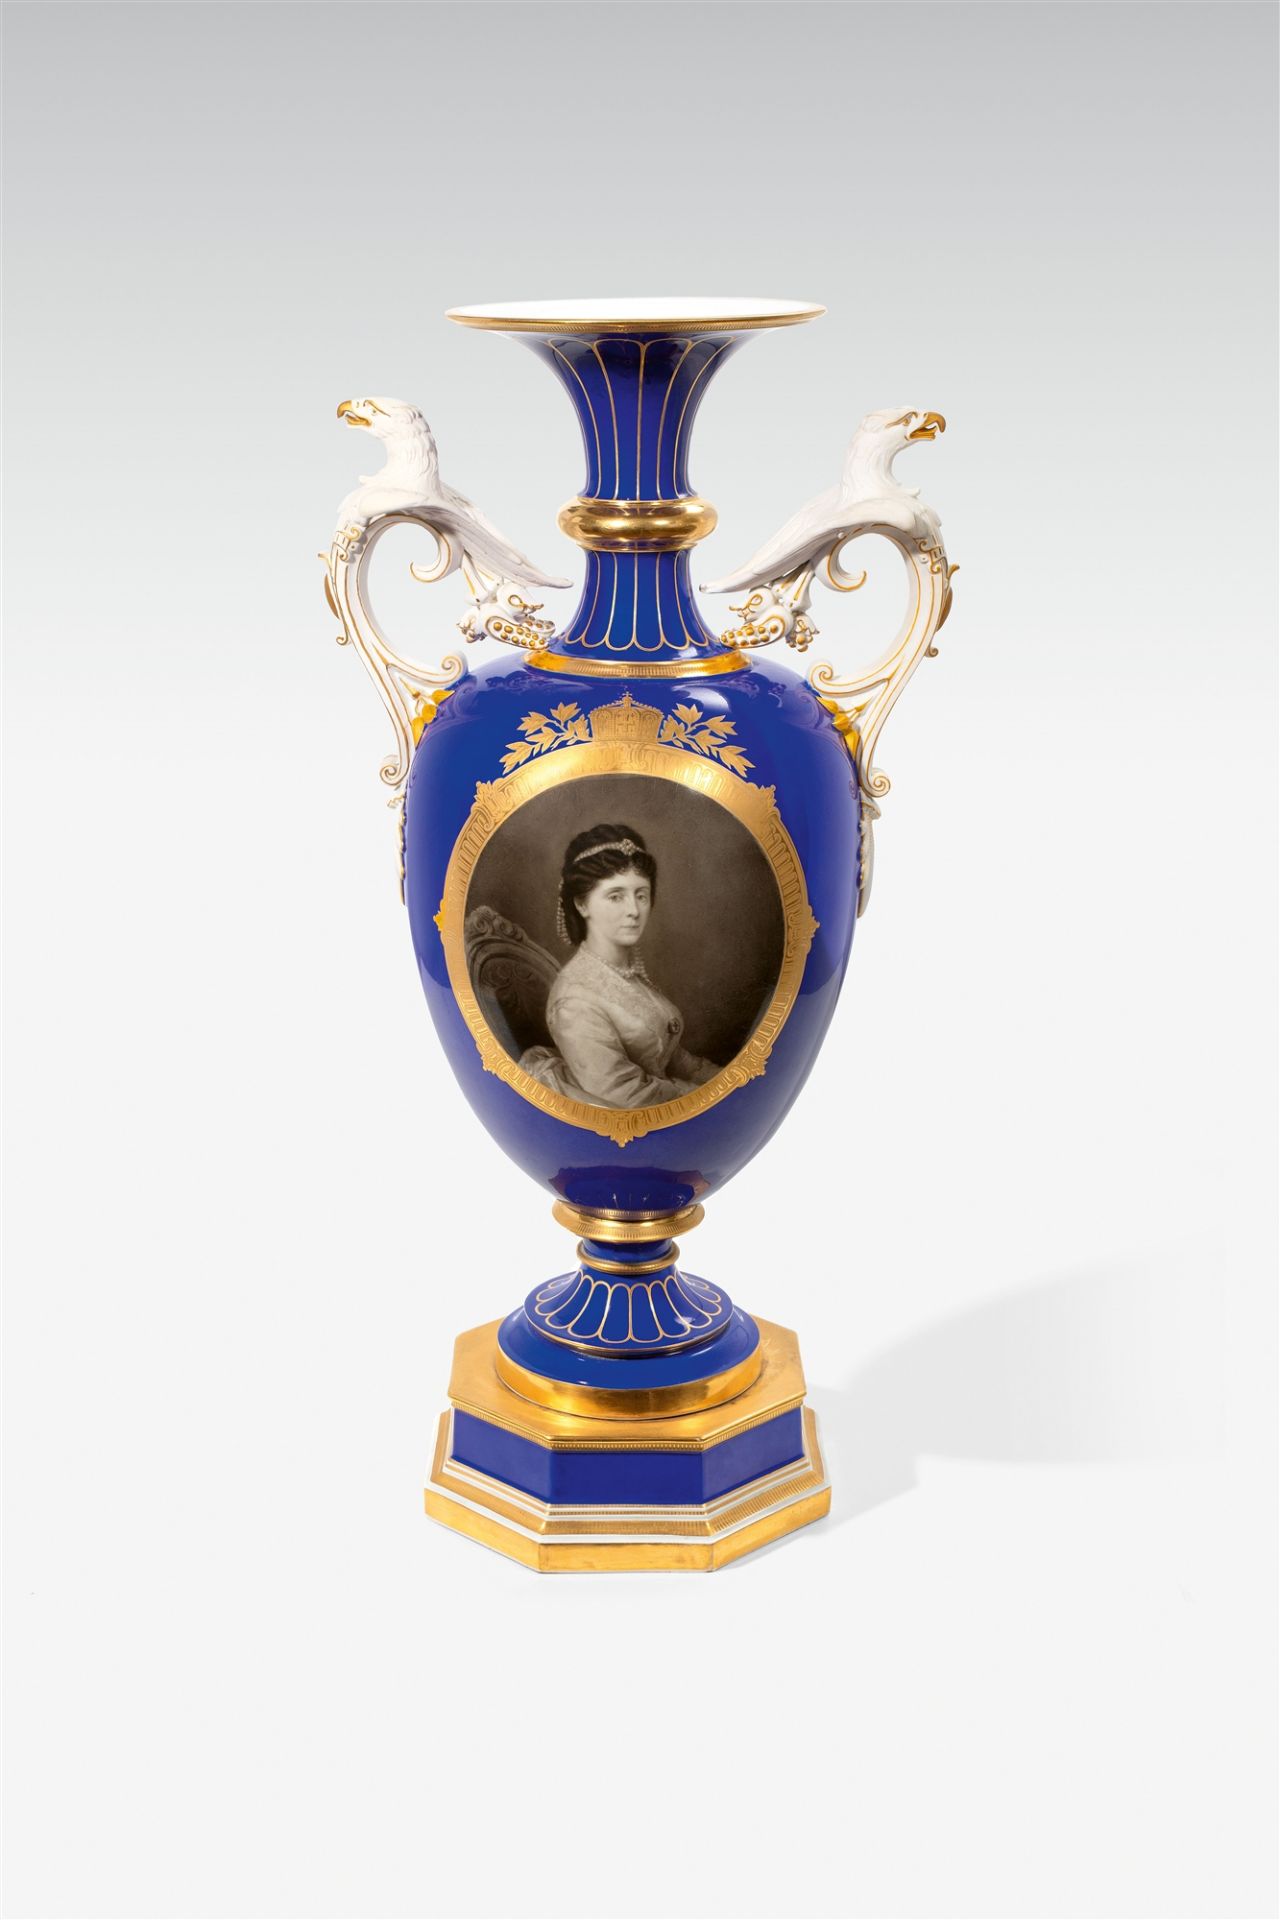 A Berlin KPM porcelain vase with a portrait of Empress Augusta